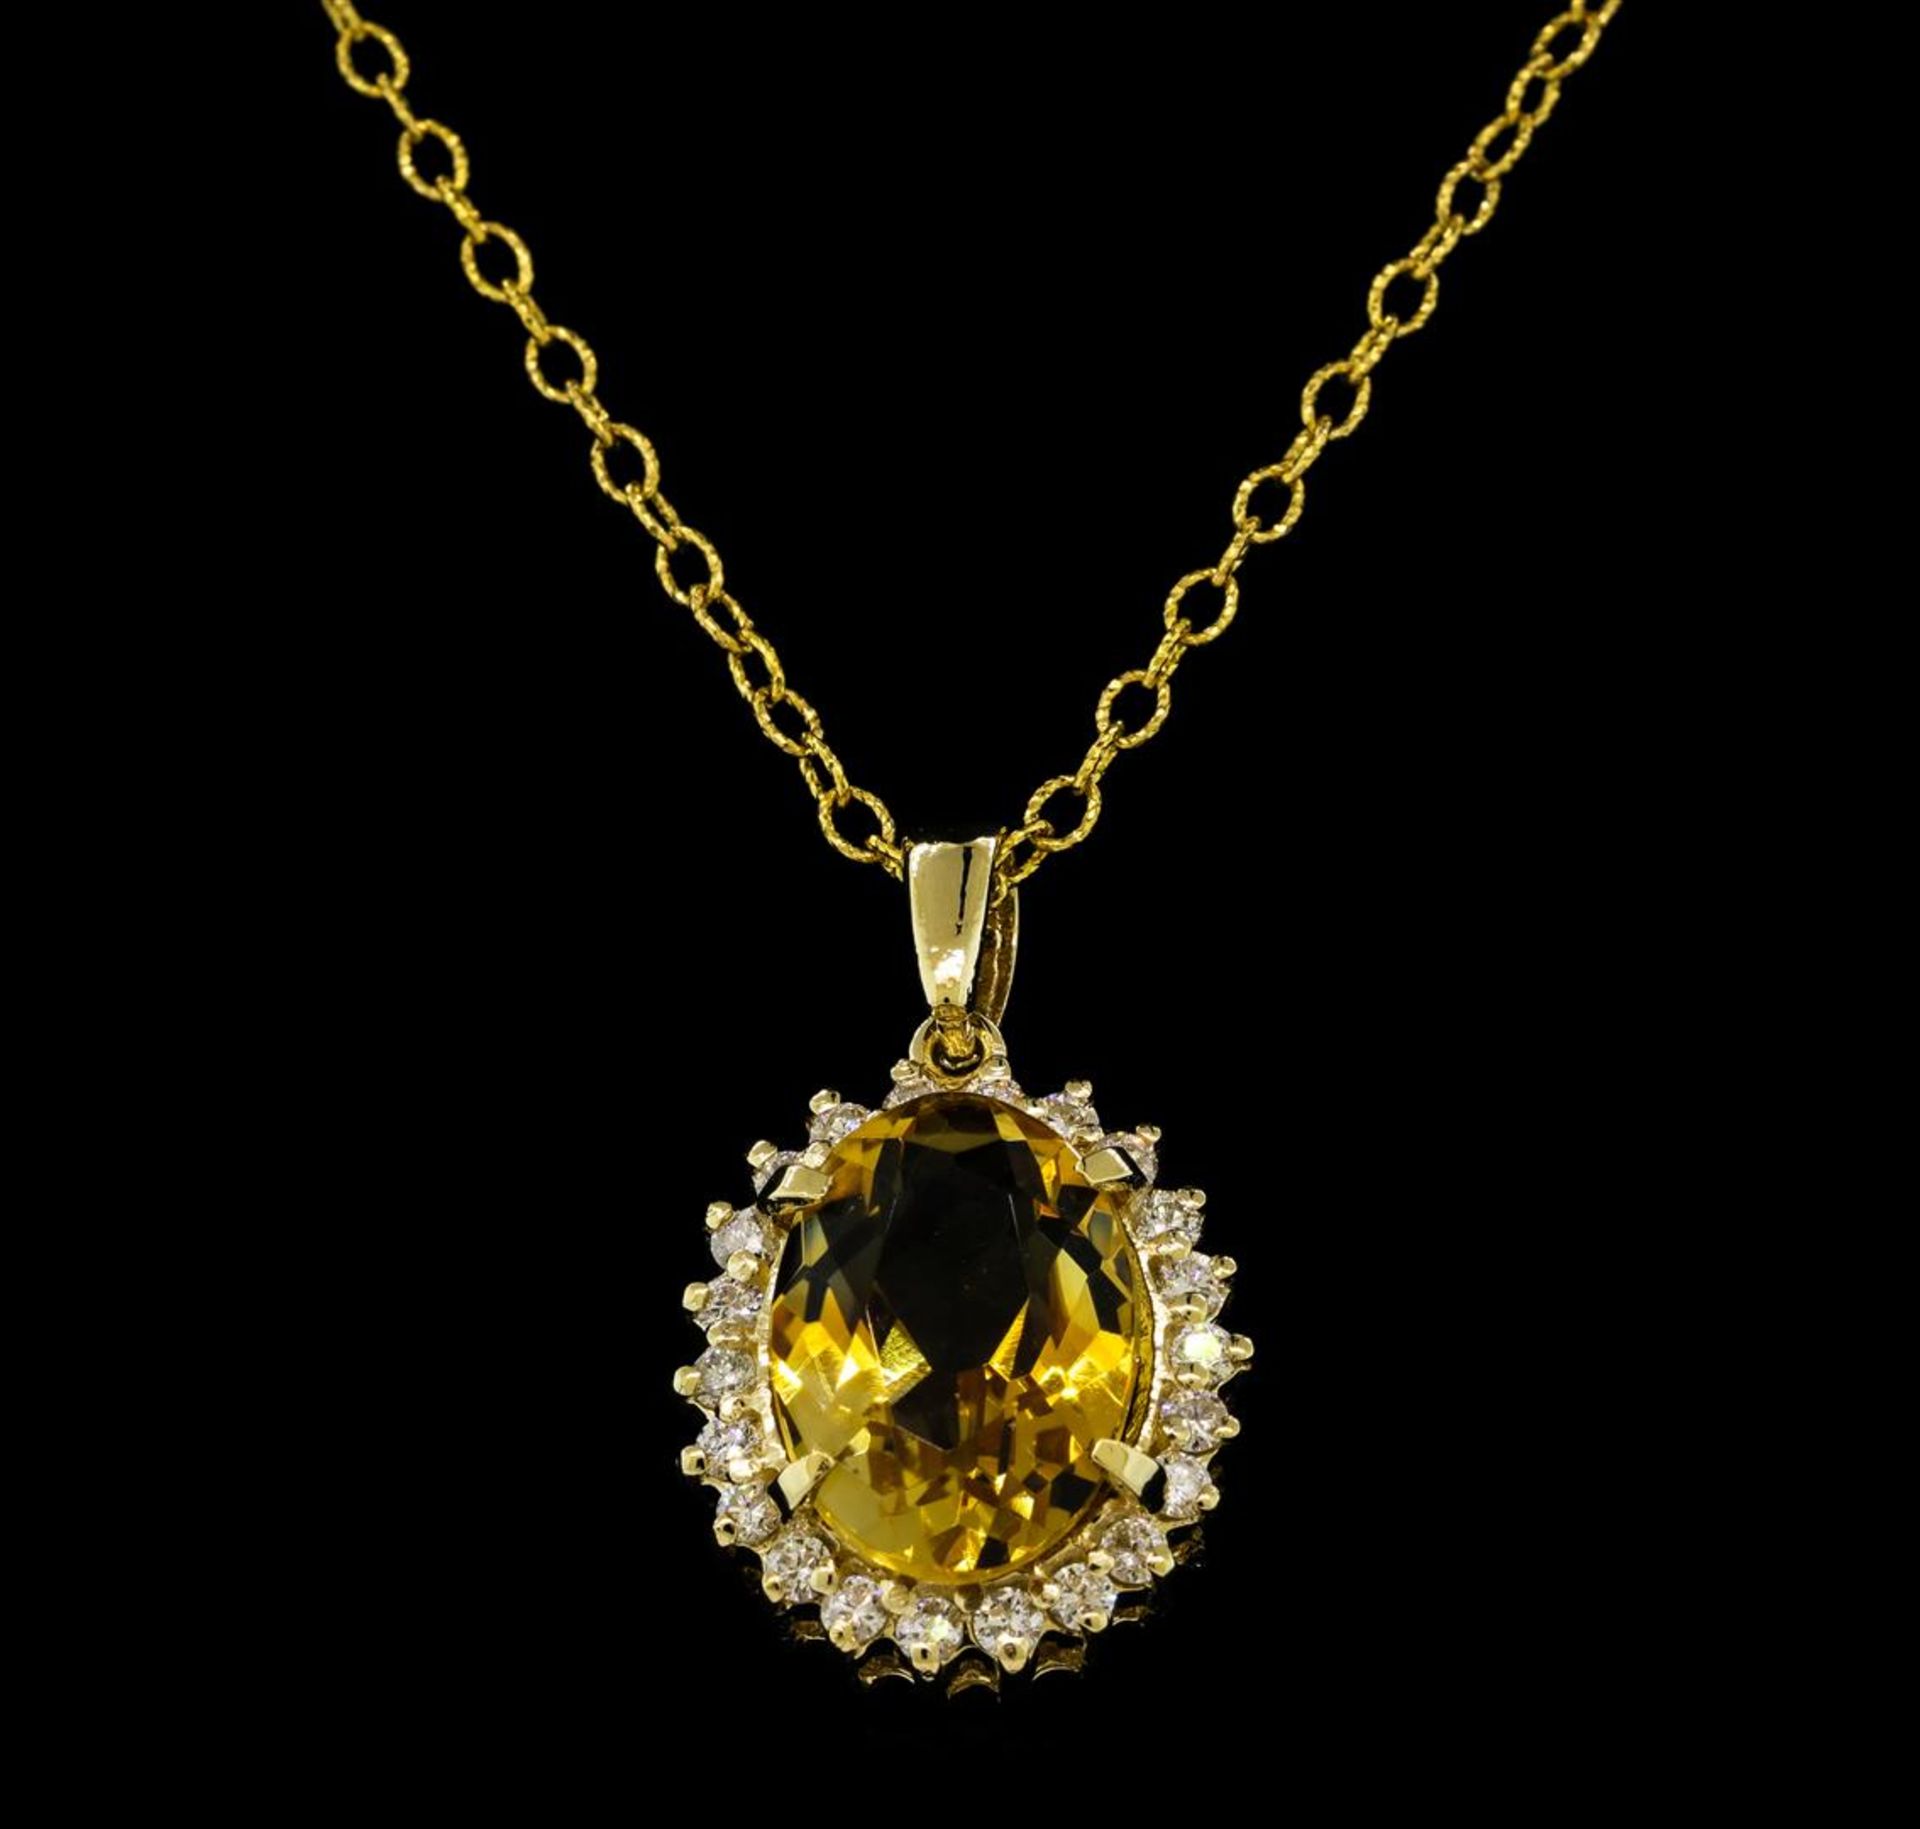 5.65 ctw Citrine Quartz and Diamond Pendant With Chain - 14KT Yellow Gold - Image 2 of 2